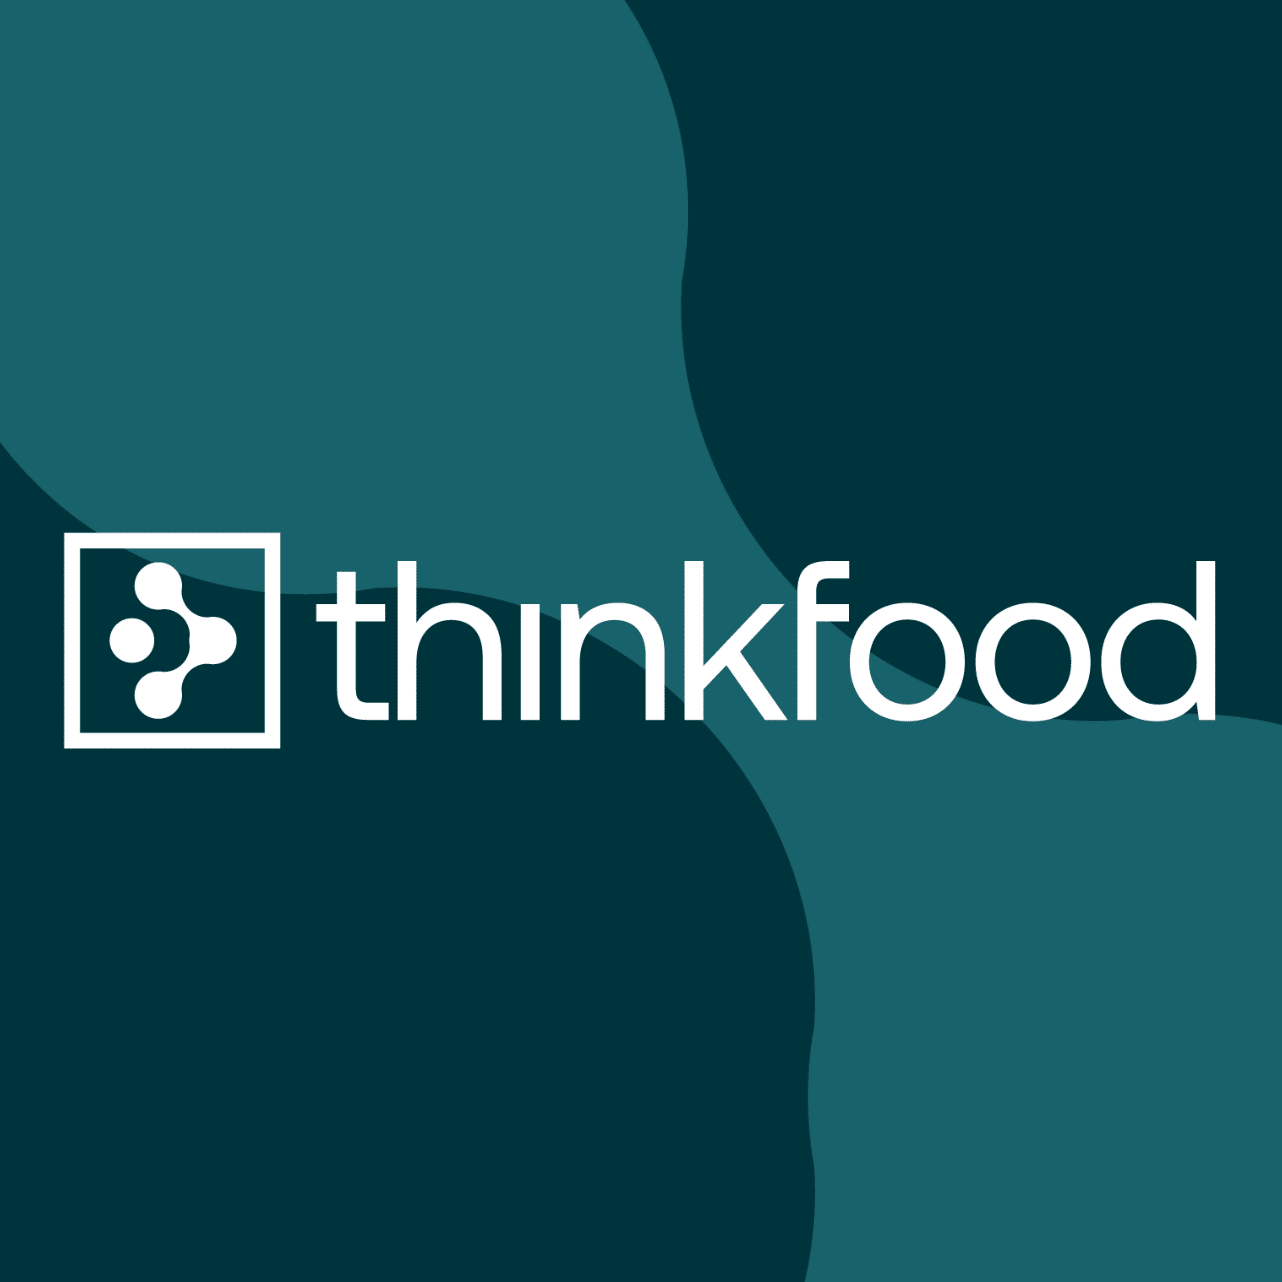 thinkfood